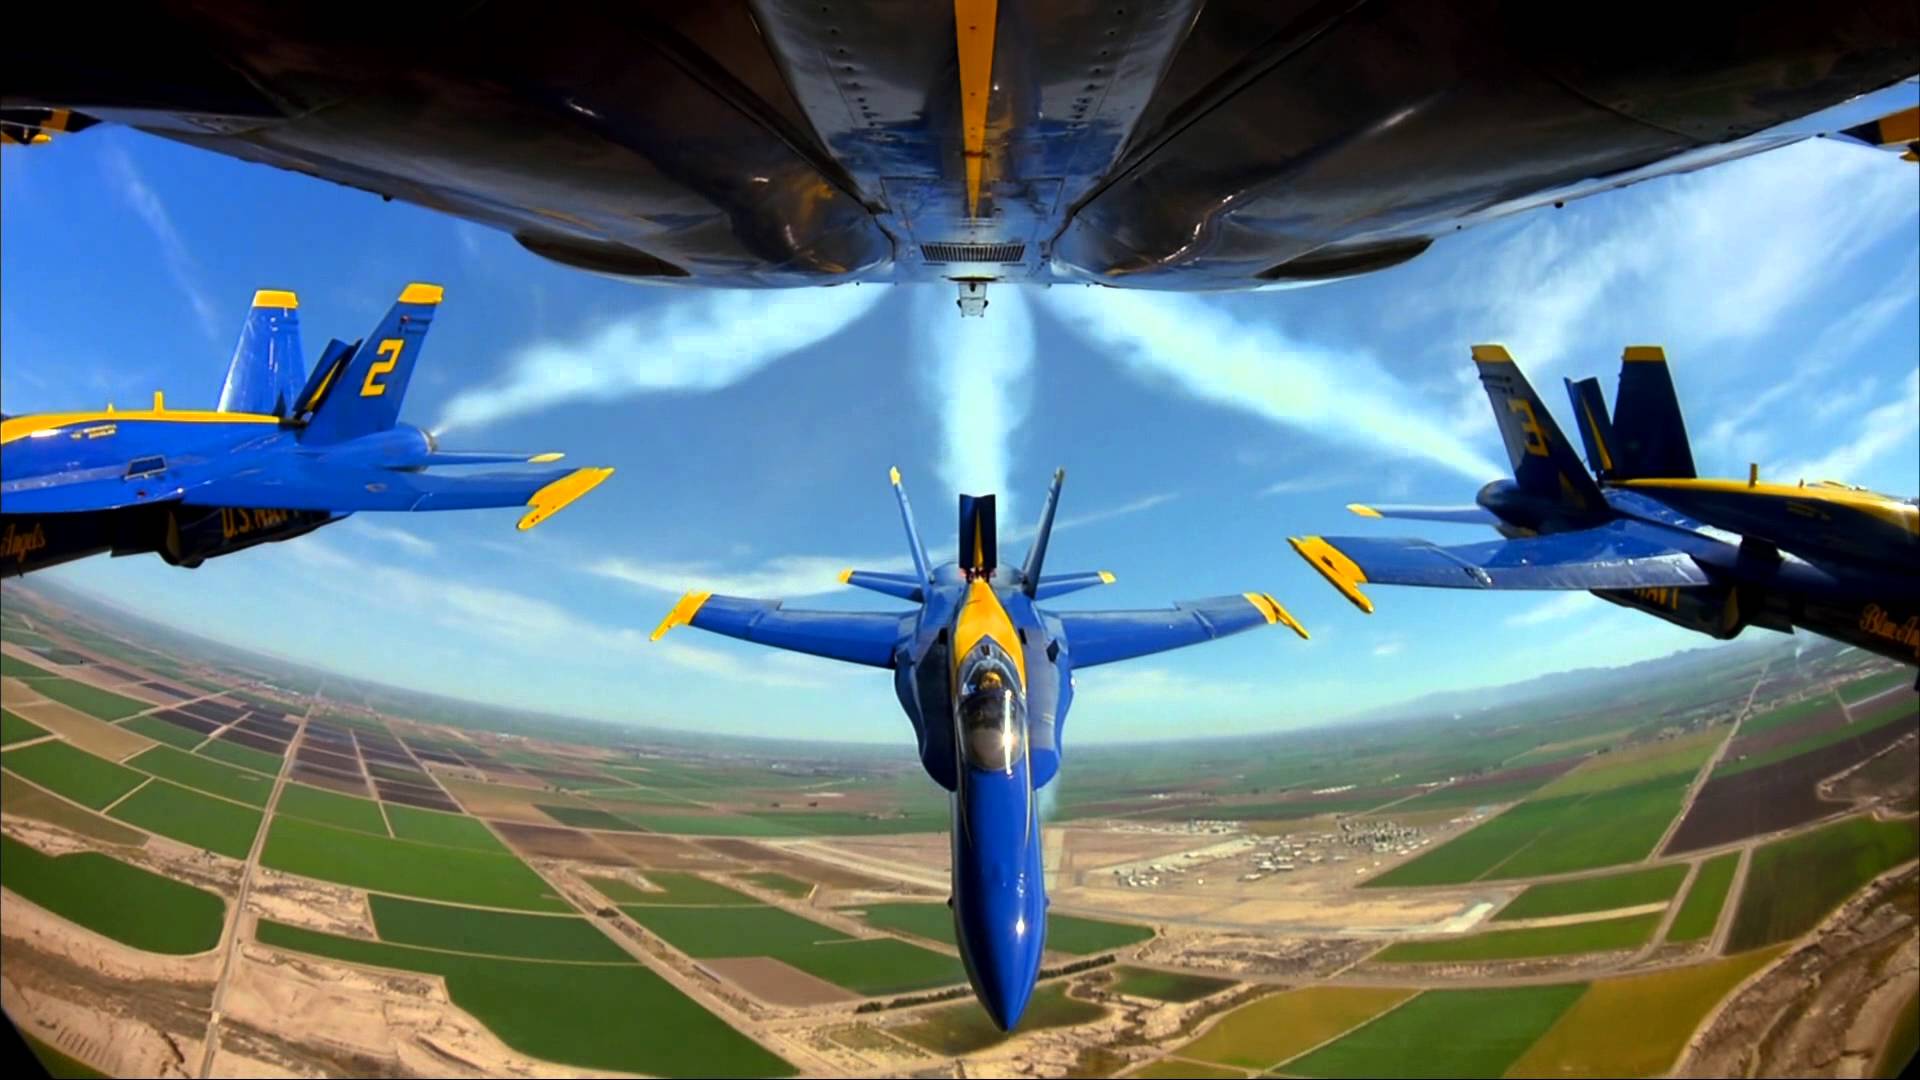 Blue Angels Air Show 1080p - YouTube